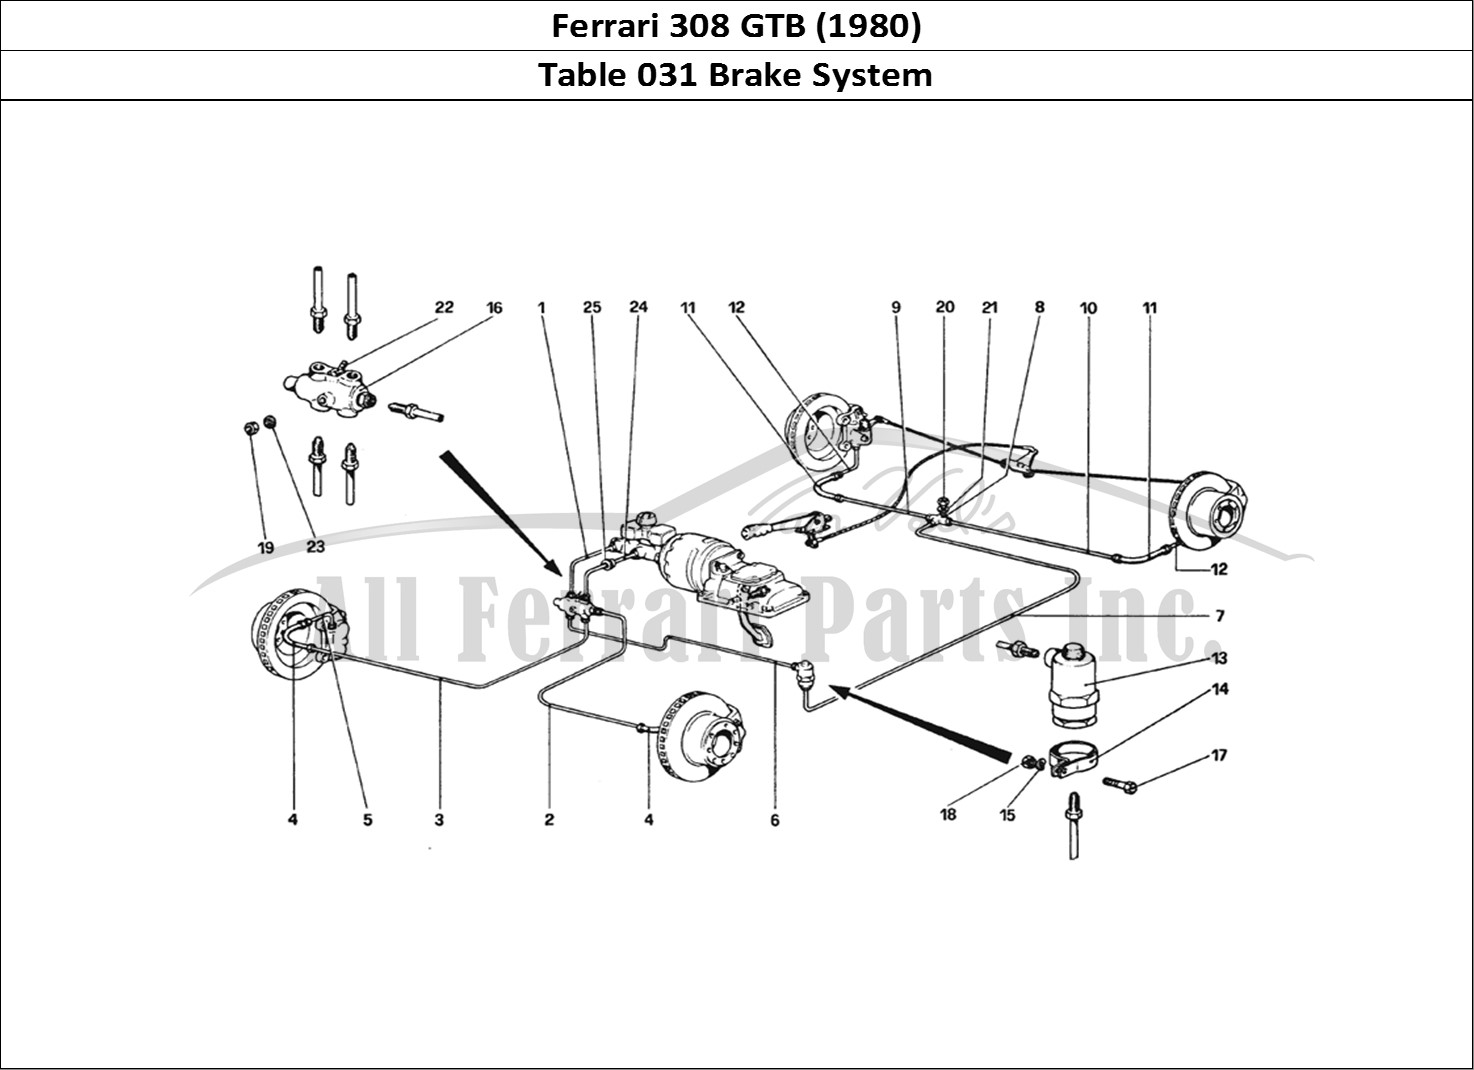 Ferrari Parts Ferrari 308 GTB (1980) Page 031 Brake System